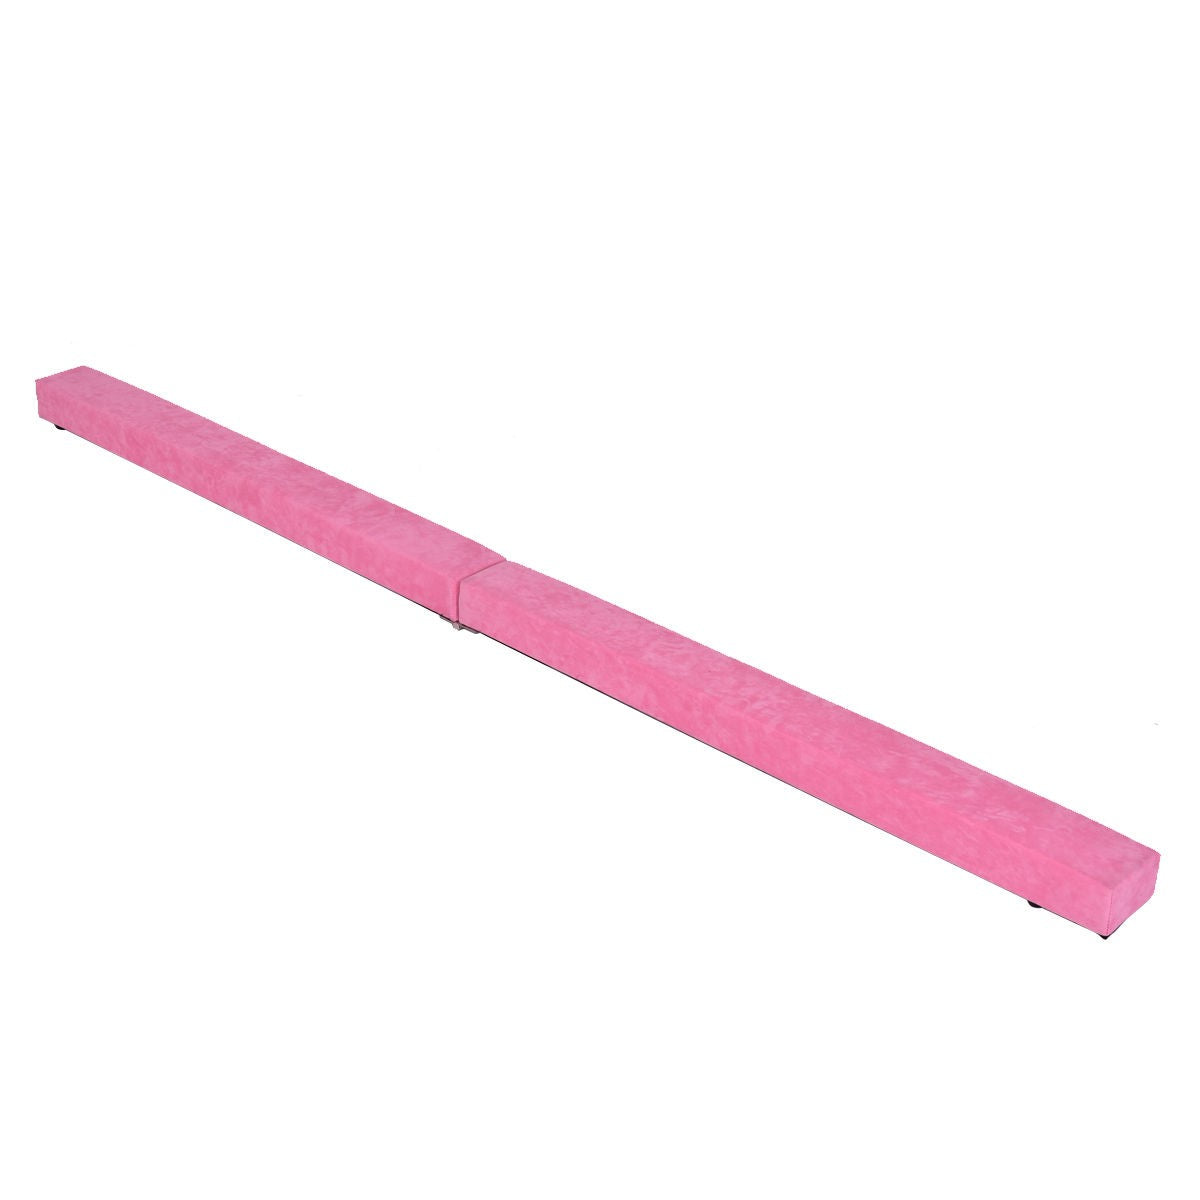 A pink sectional balance beam.